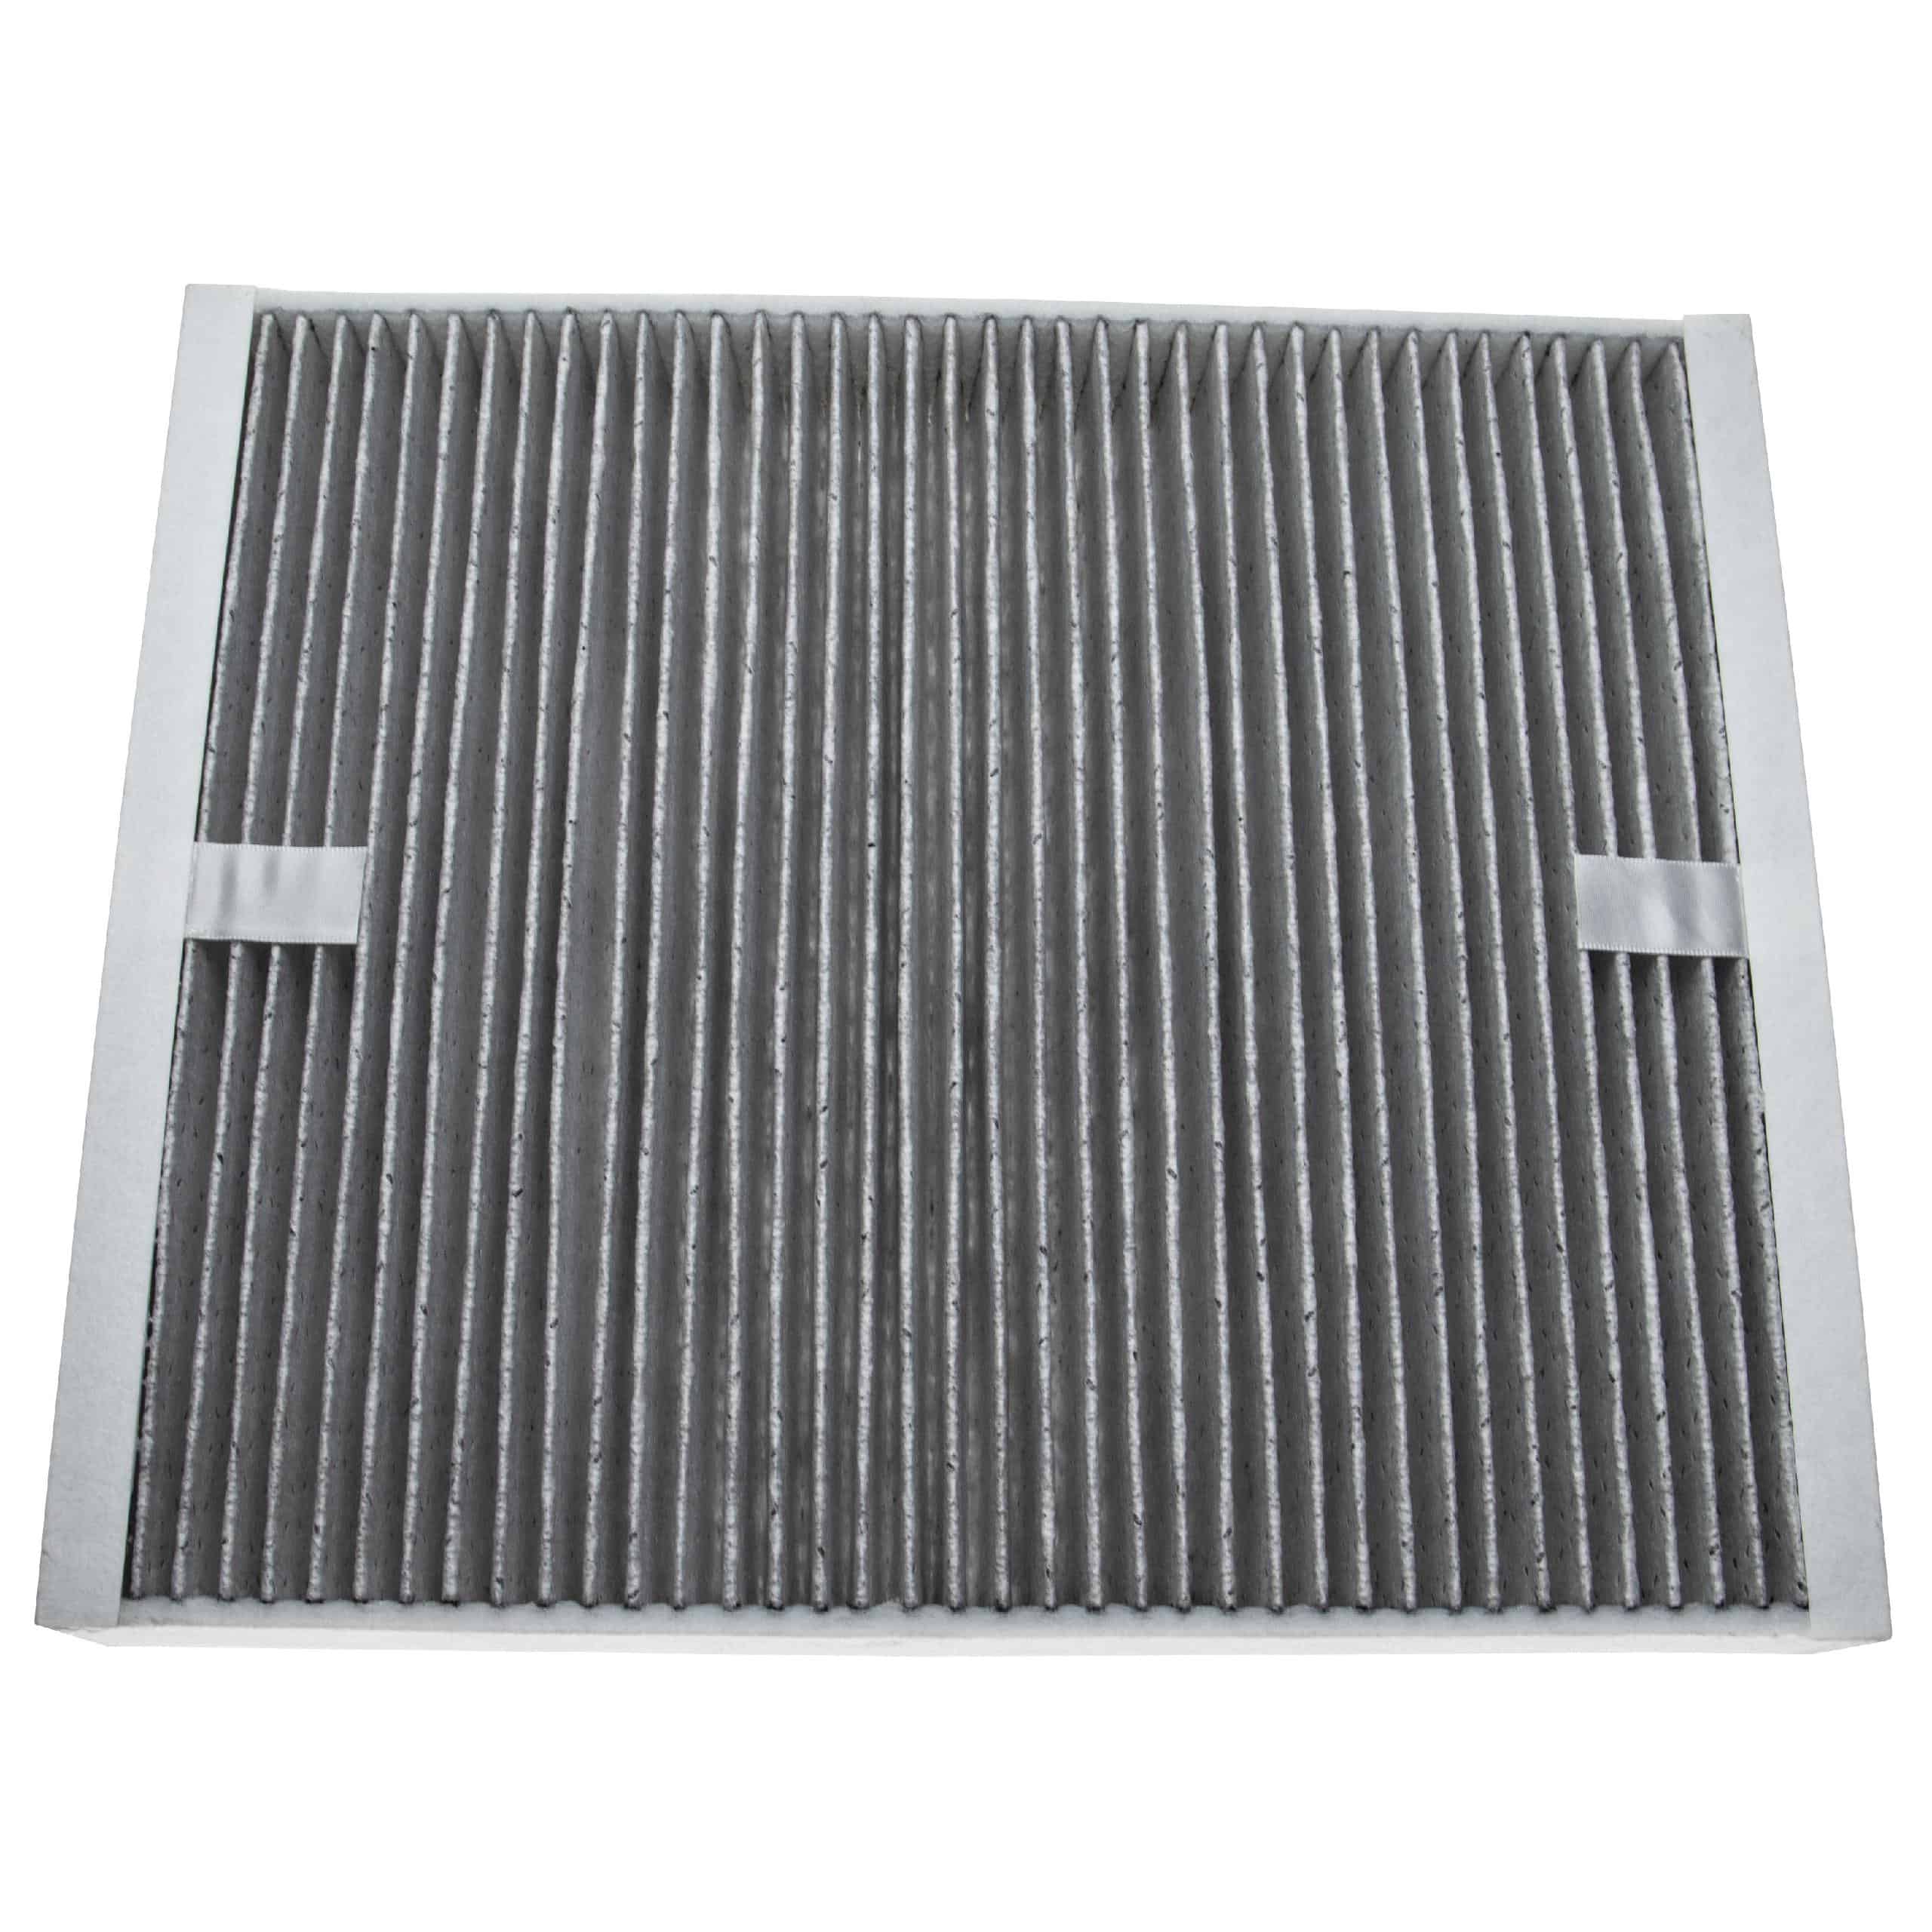 Filtro reemplaza Stadler Form R-114 - HEPA (H12) + carbón activo, 32,4 x 27 x 4,35 cm